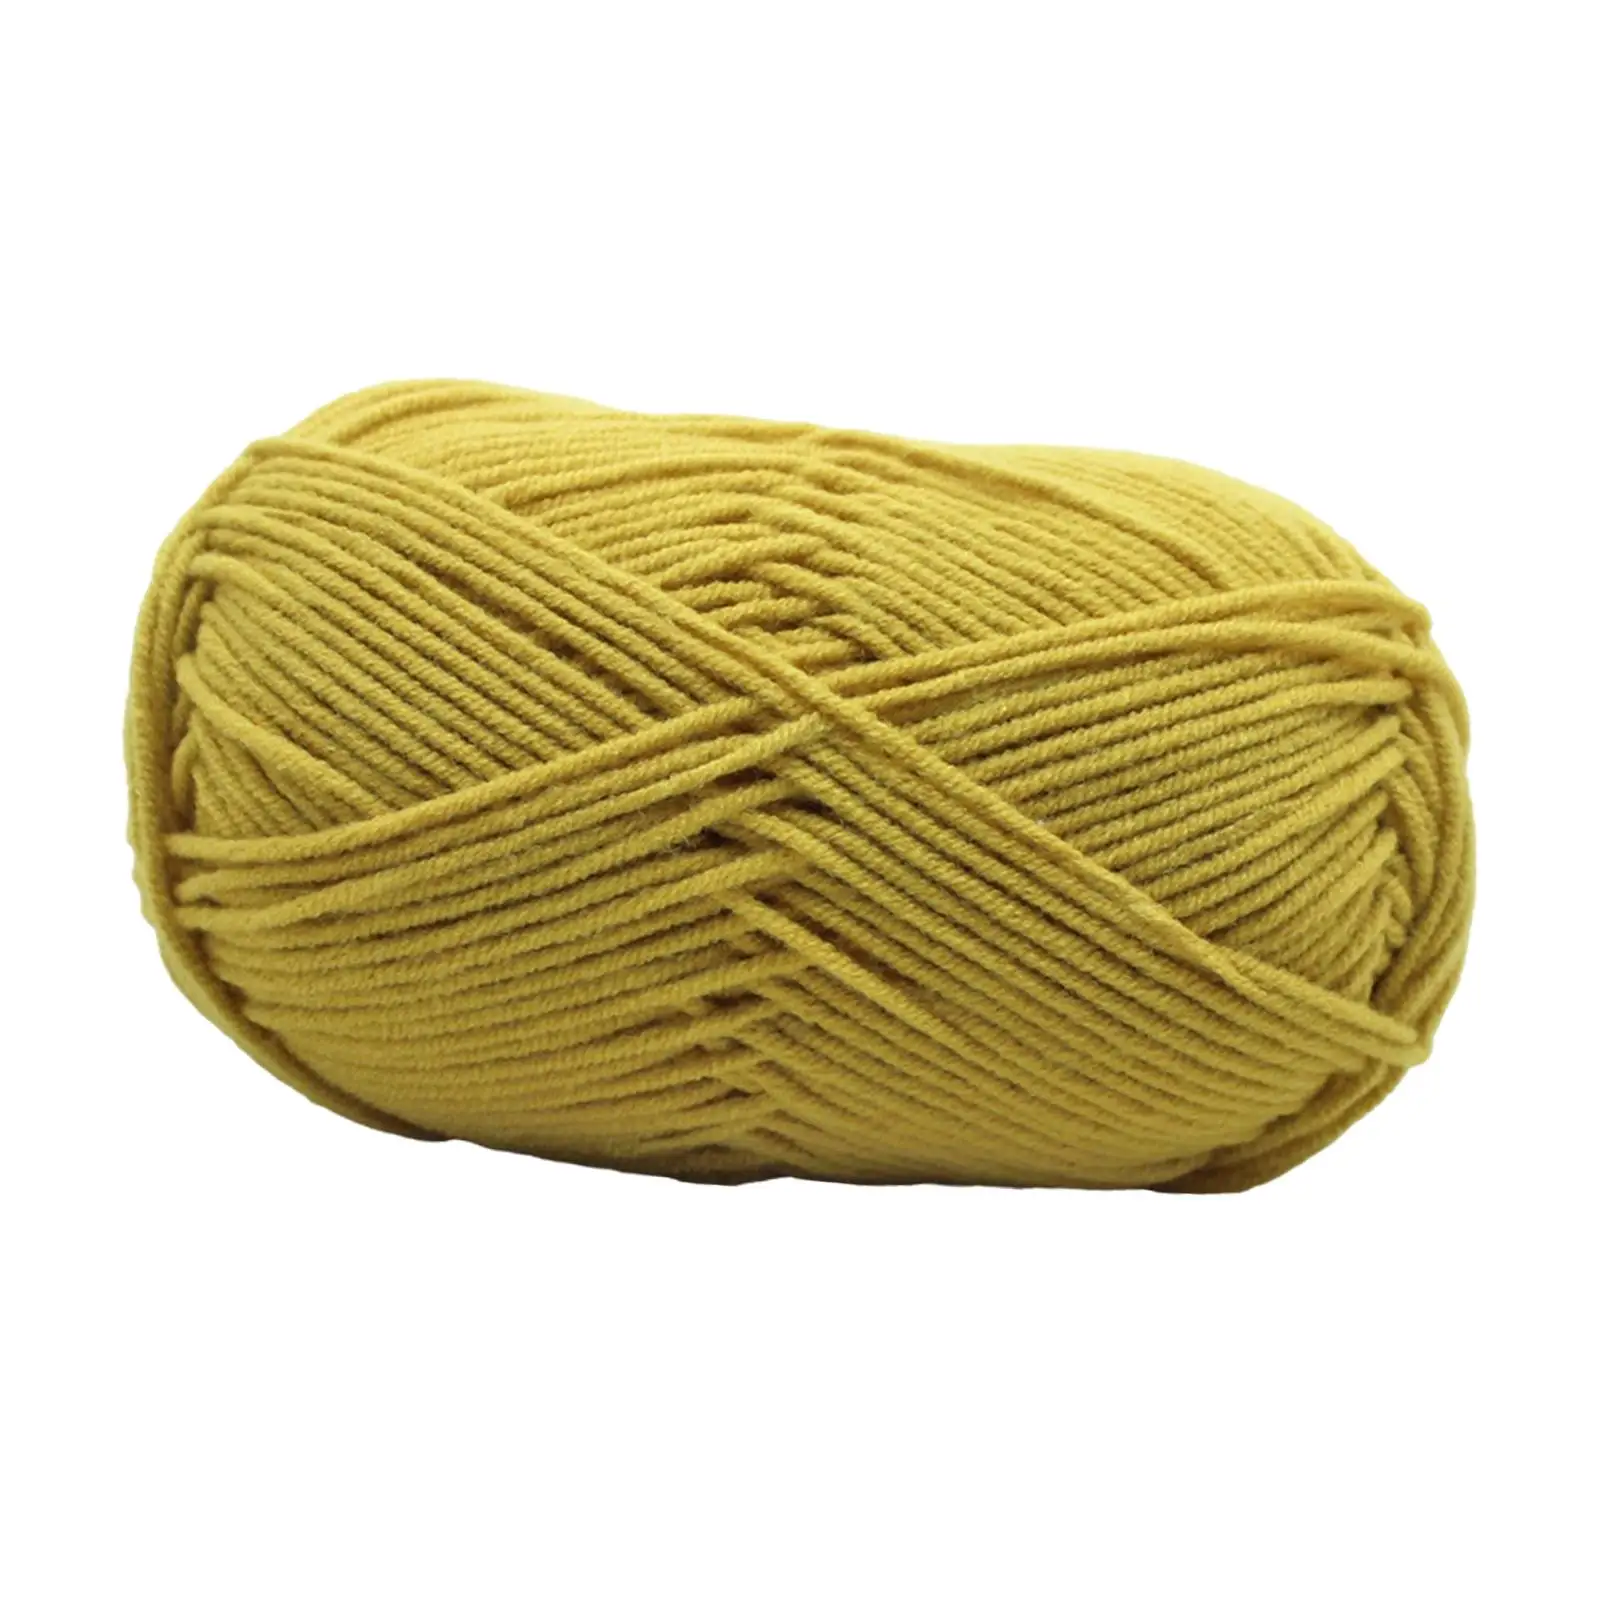 Hand Knitting Crochet Line Knitting Thread Supplies Crochet Thread for Adults